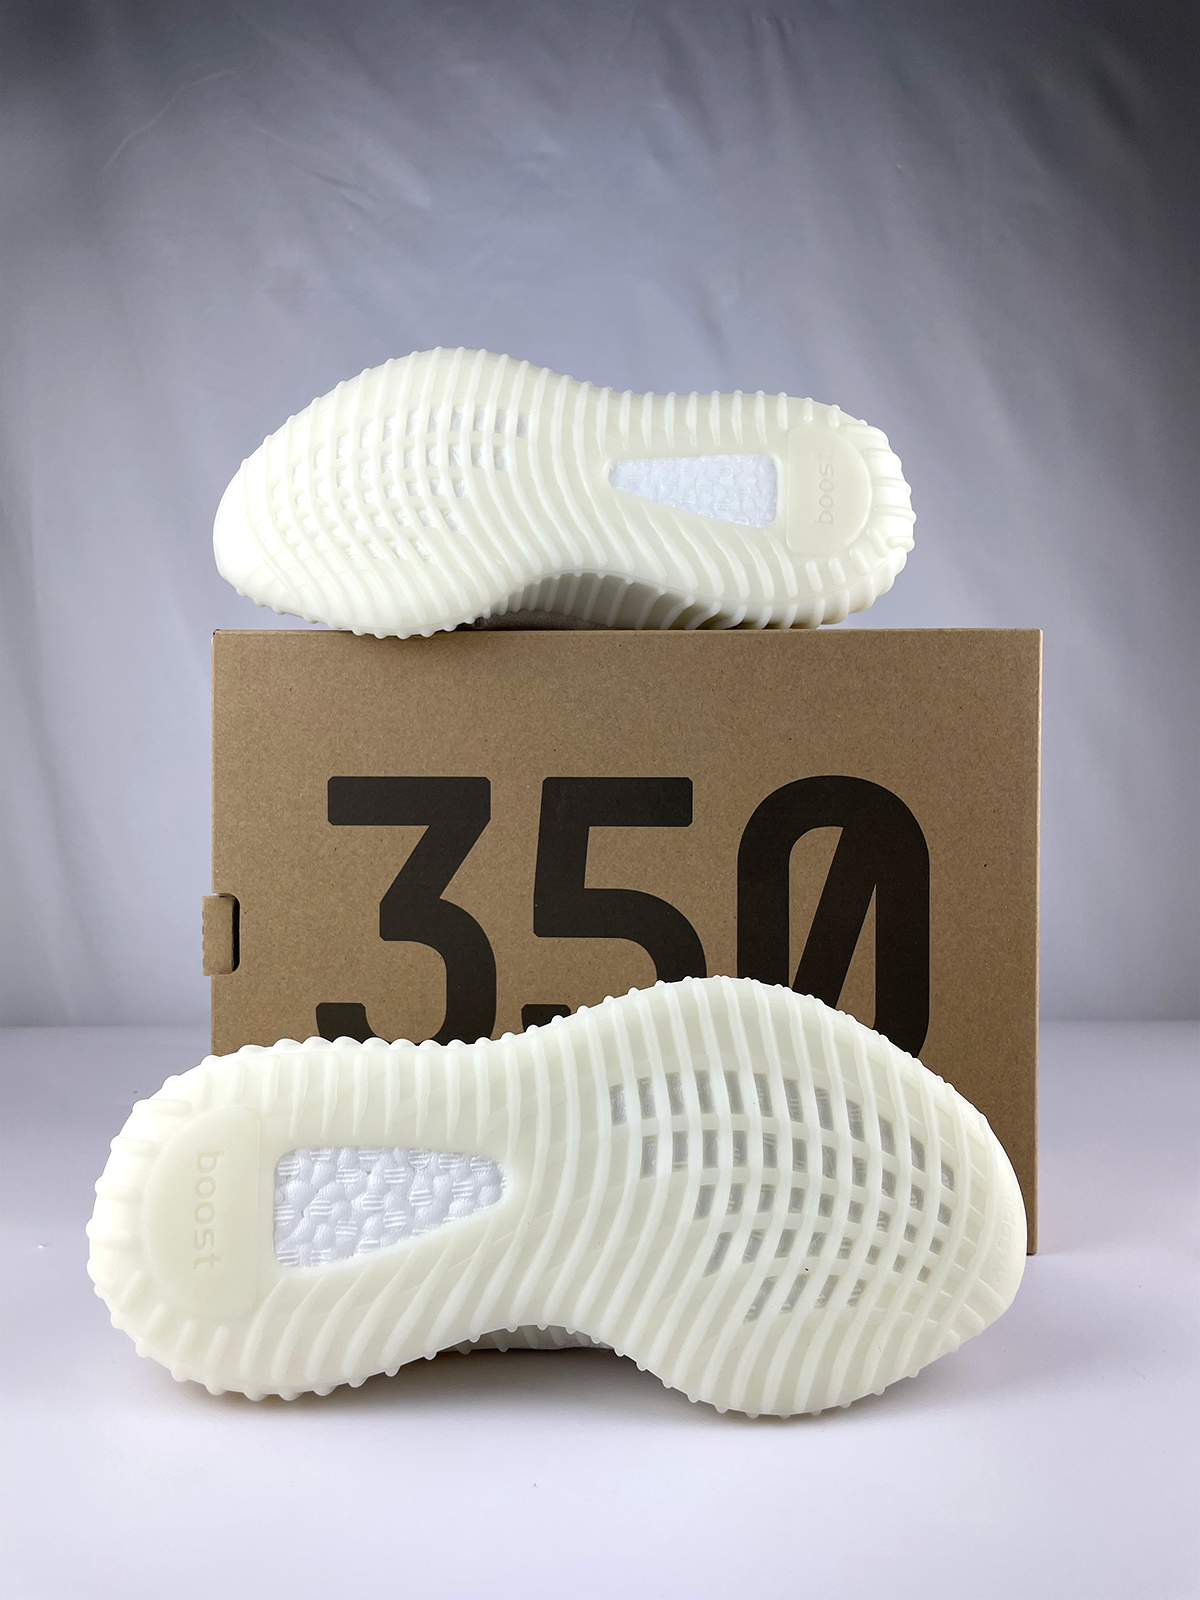 Adidas Yeezy Boost 350 V2 Bone Size 6.5 Women / 4.5 Men Off white